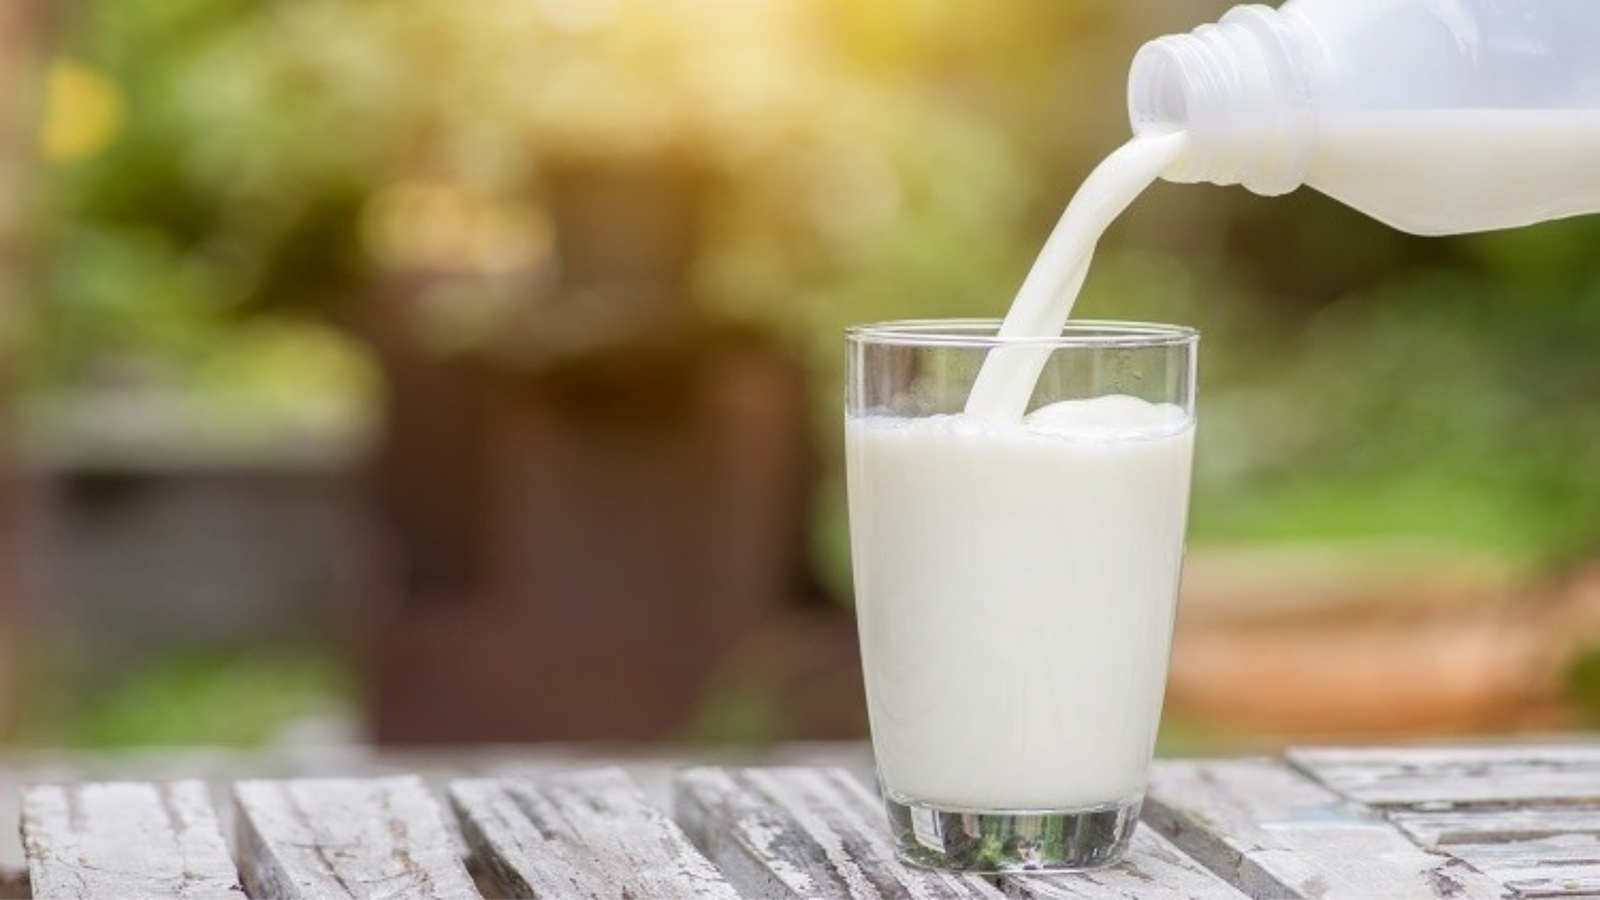 ASkimmed Milk Or Full Fat Milk for Weight Loss